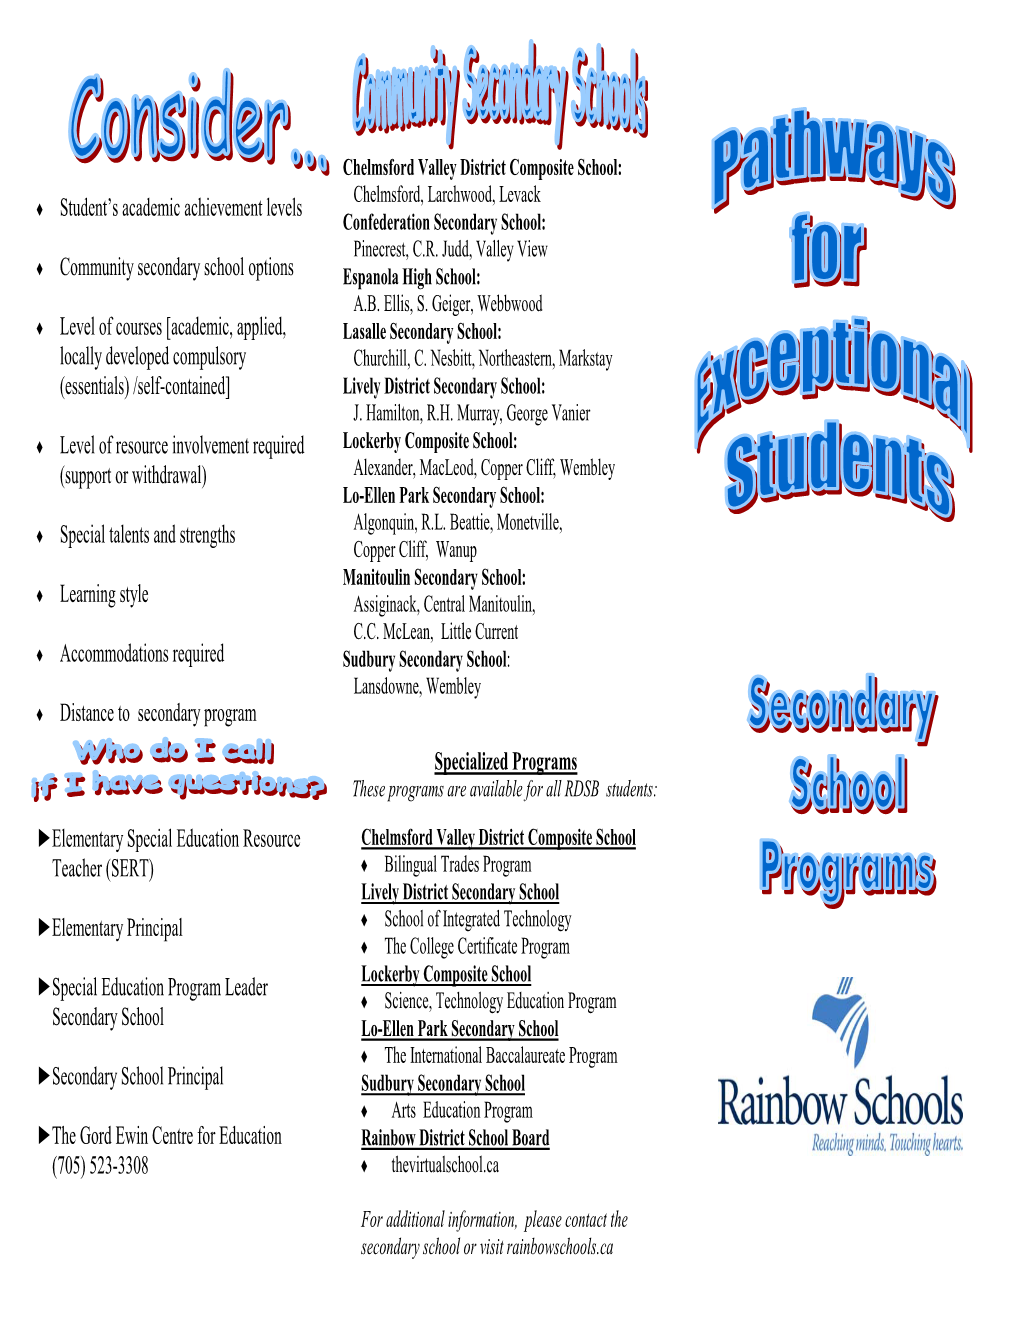 Secondary School Programs